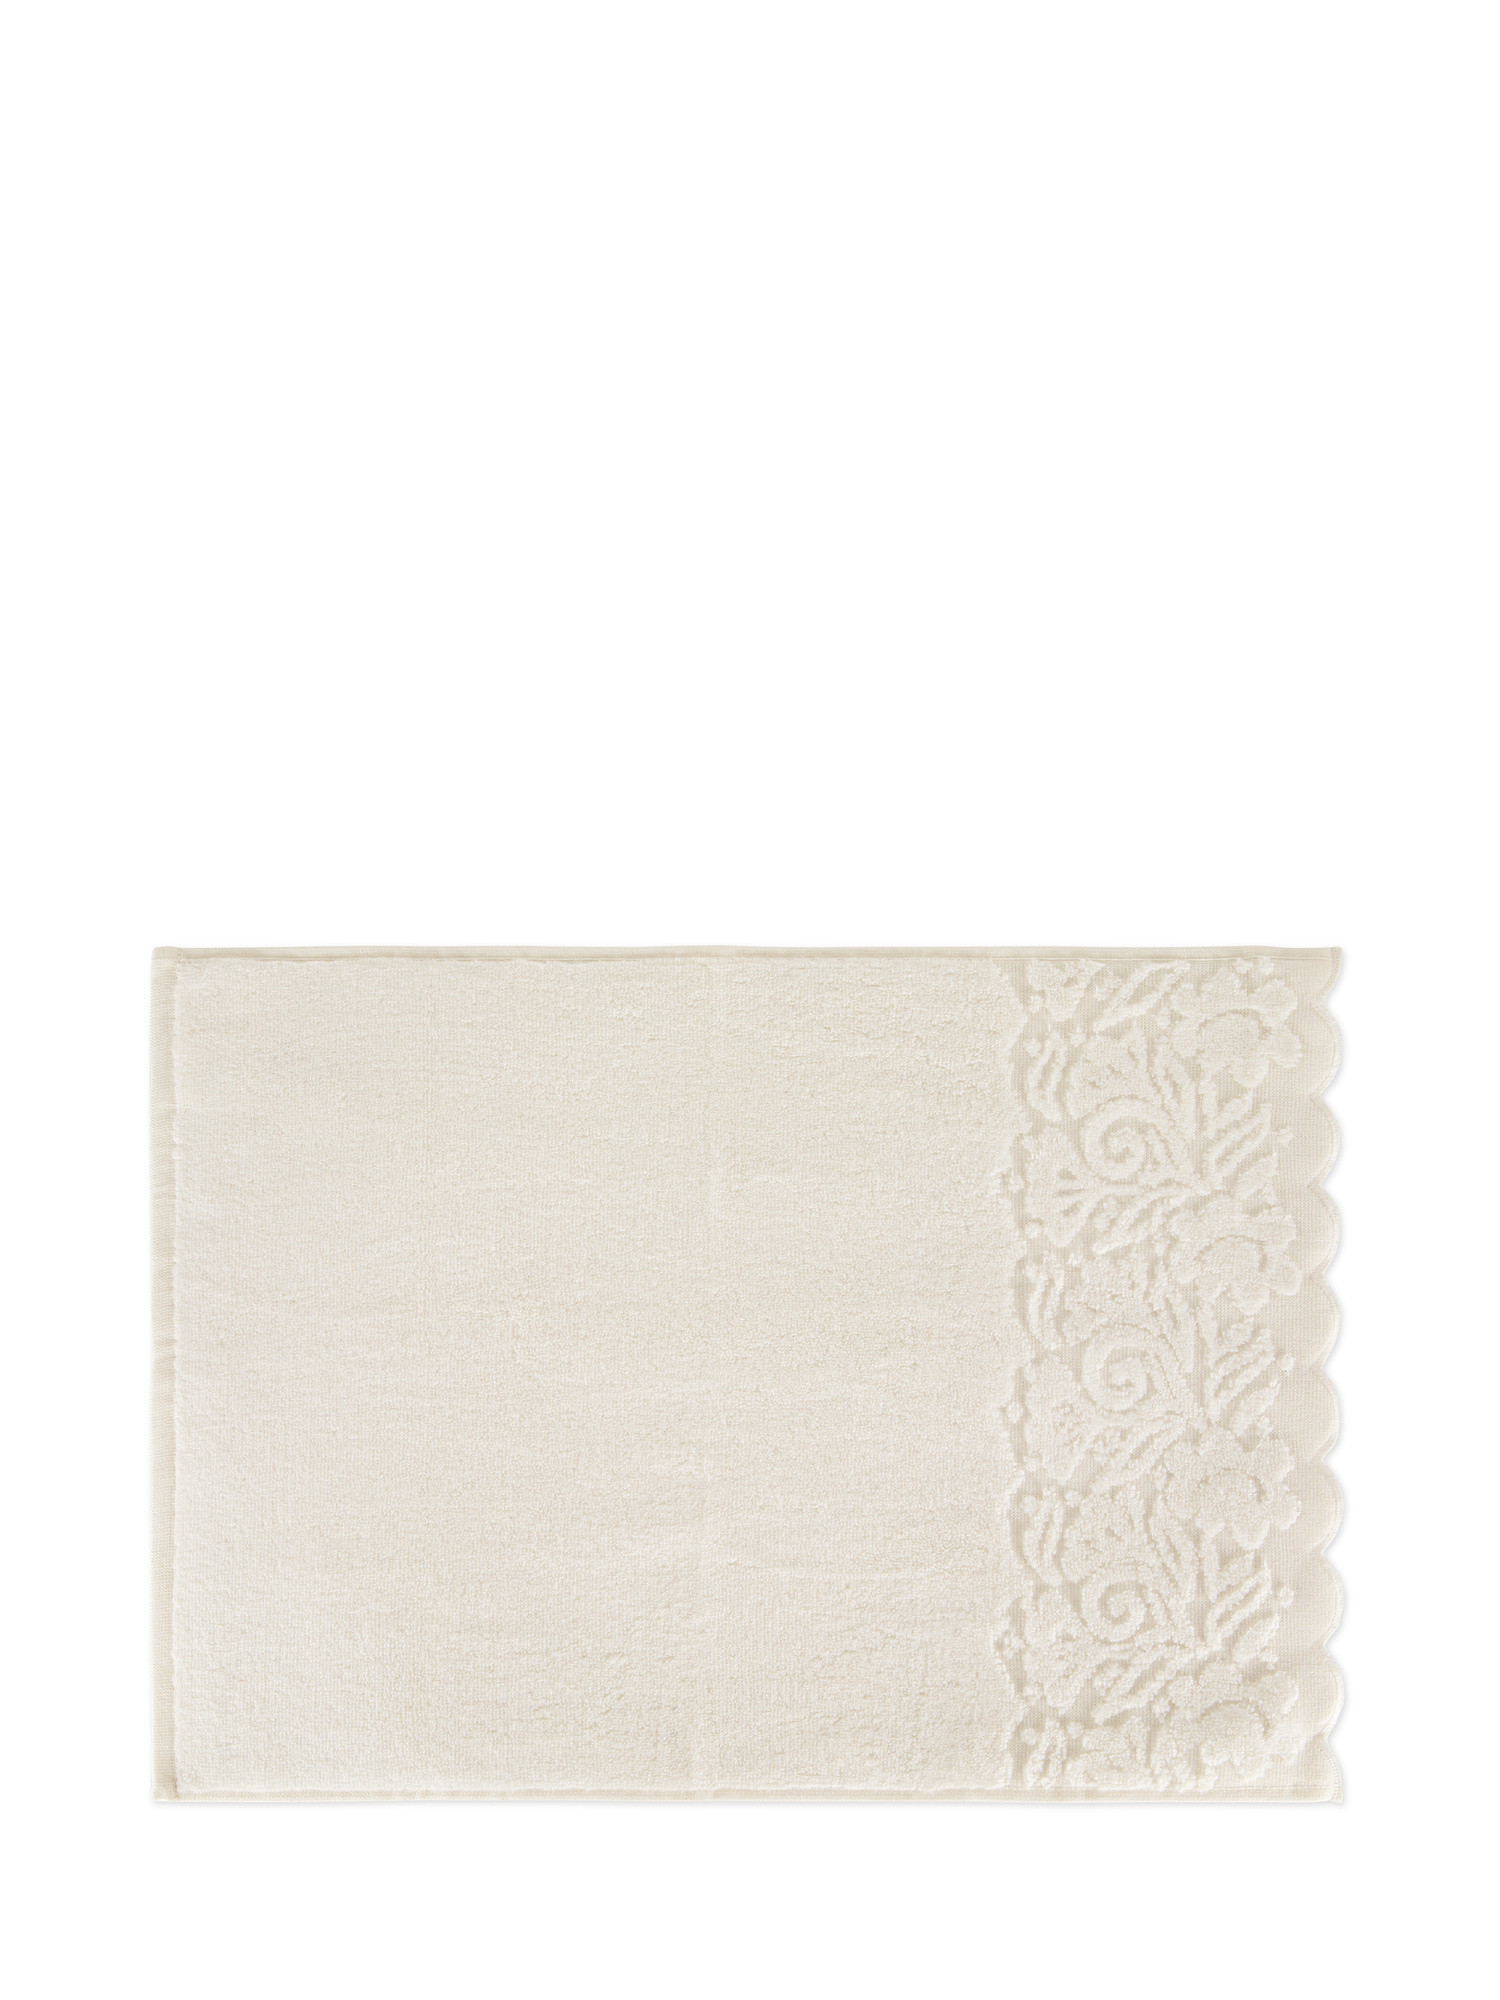 Asciugamano puro cotone bordo jacquard, Bianco, large image number 1